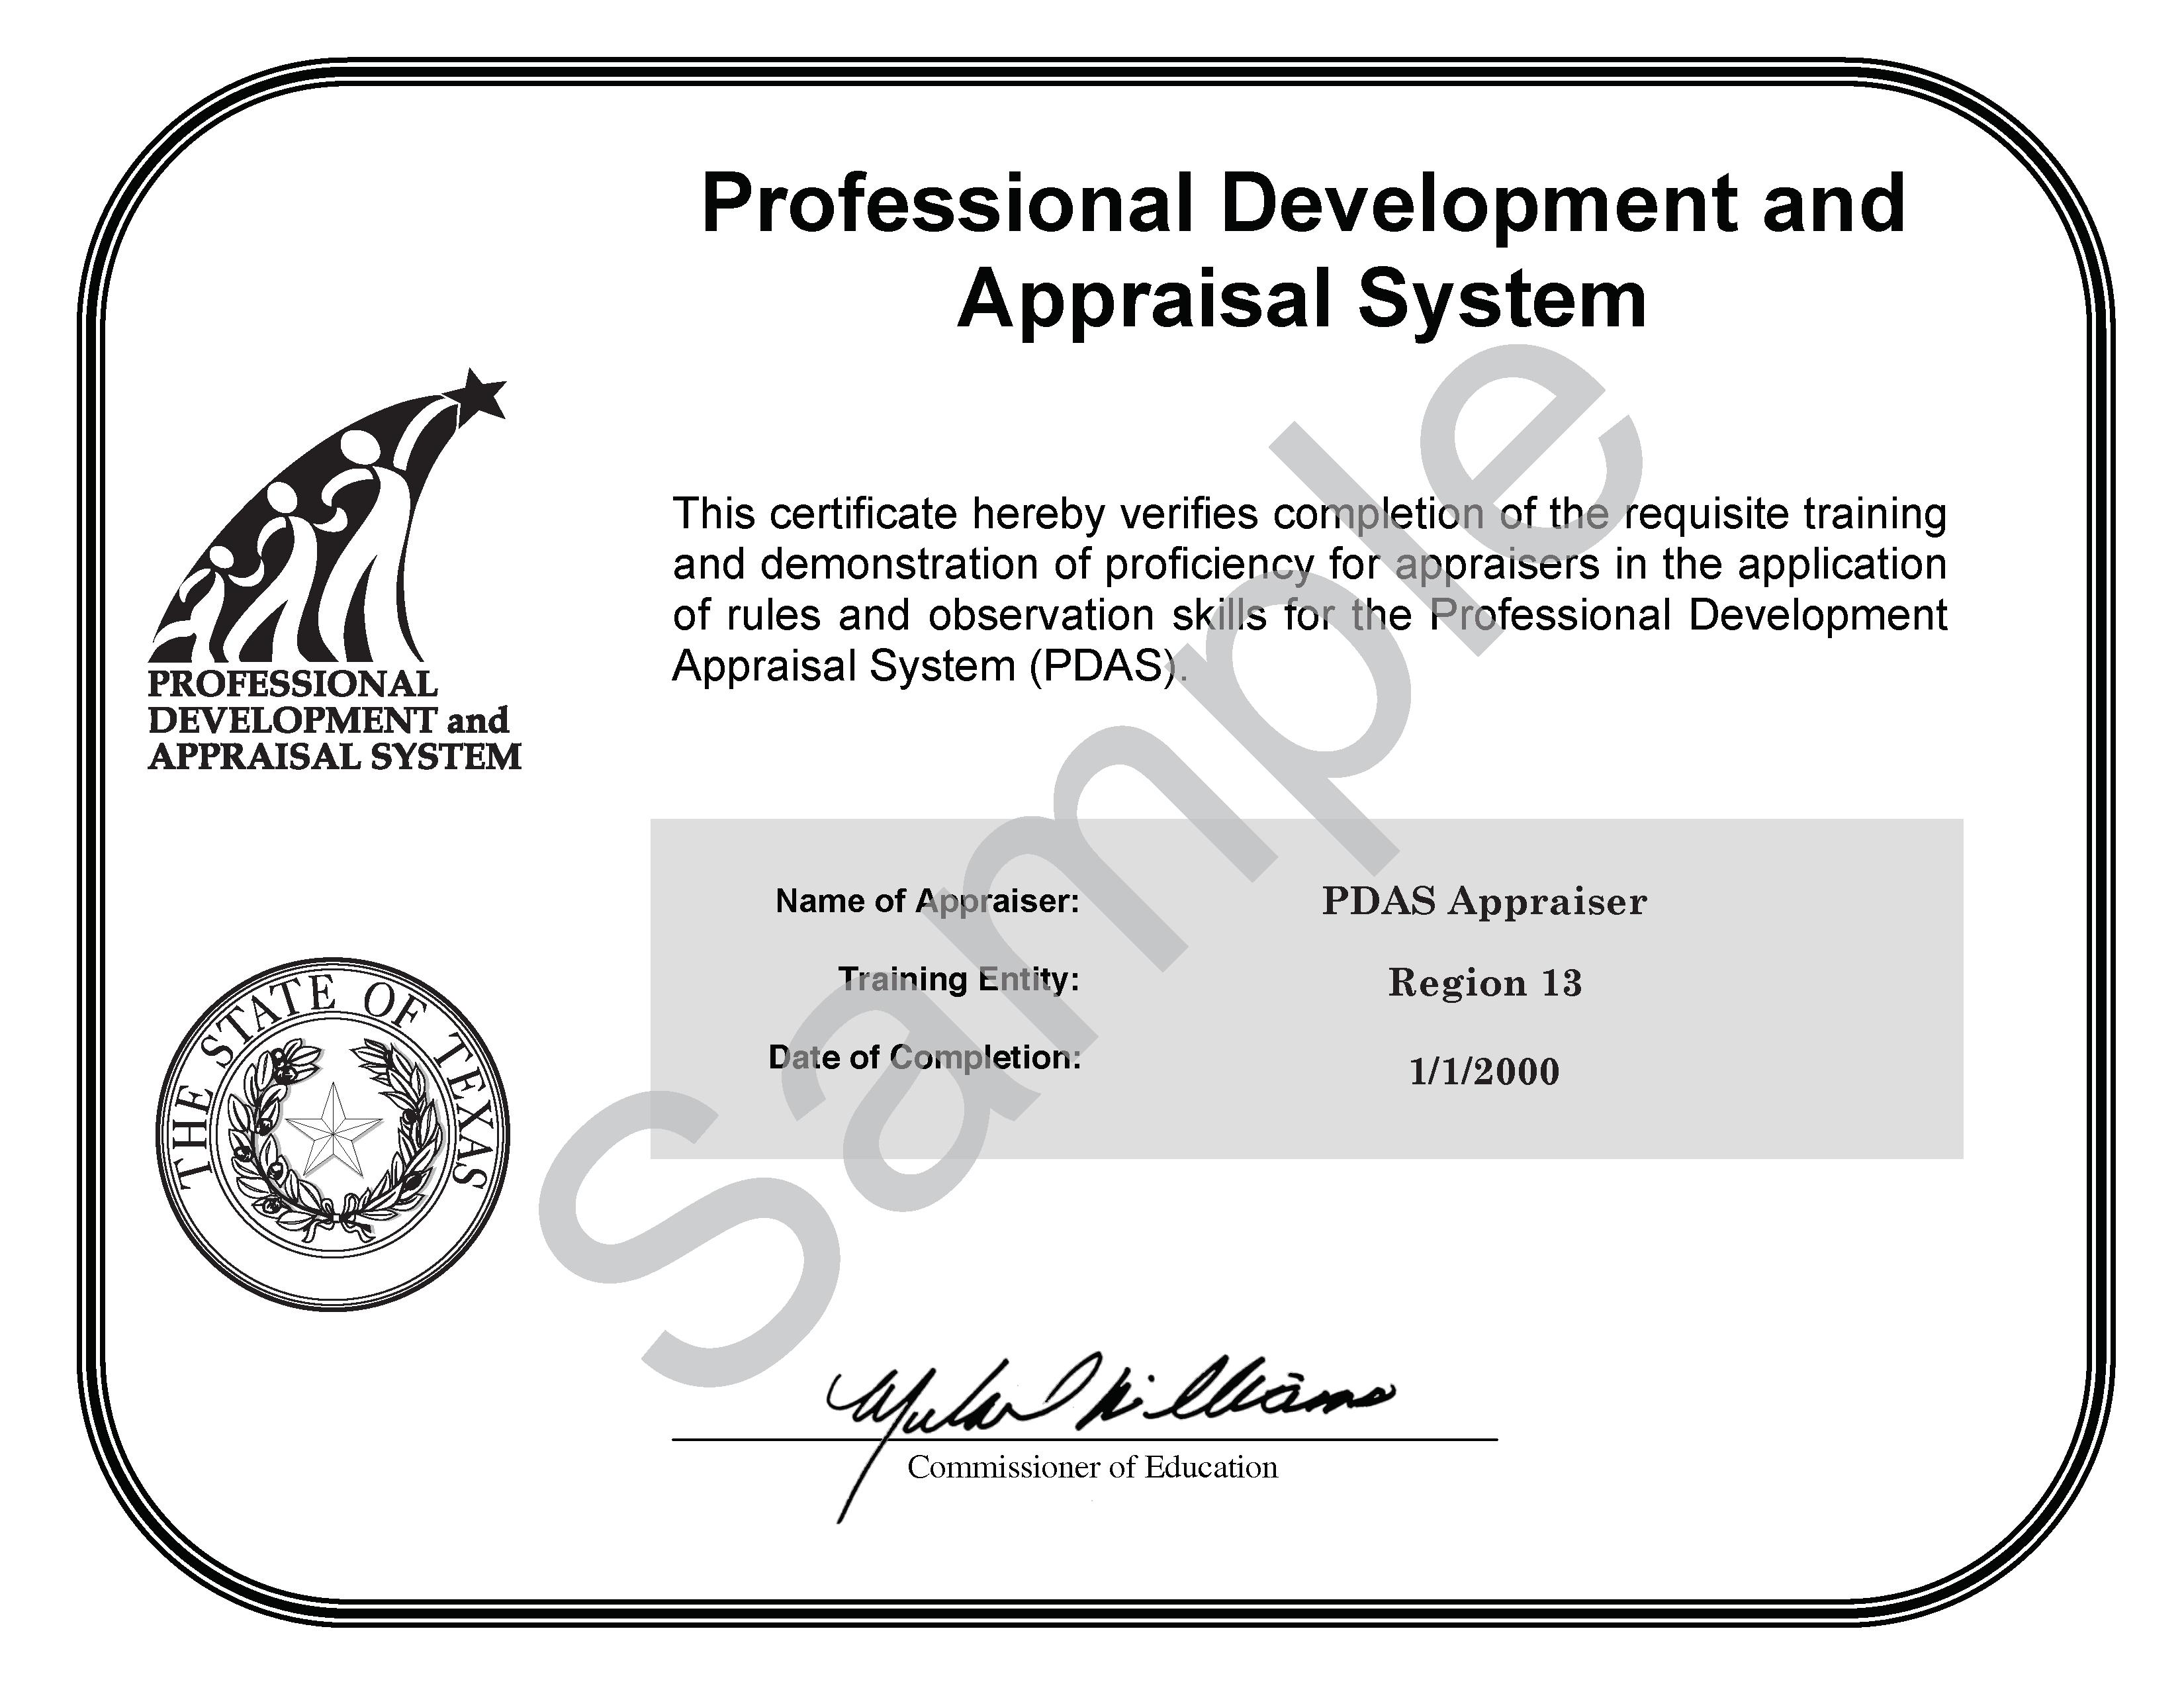 PDAS Certificate